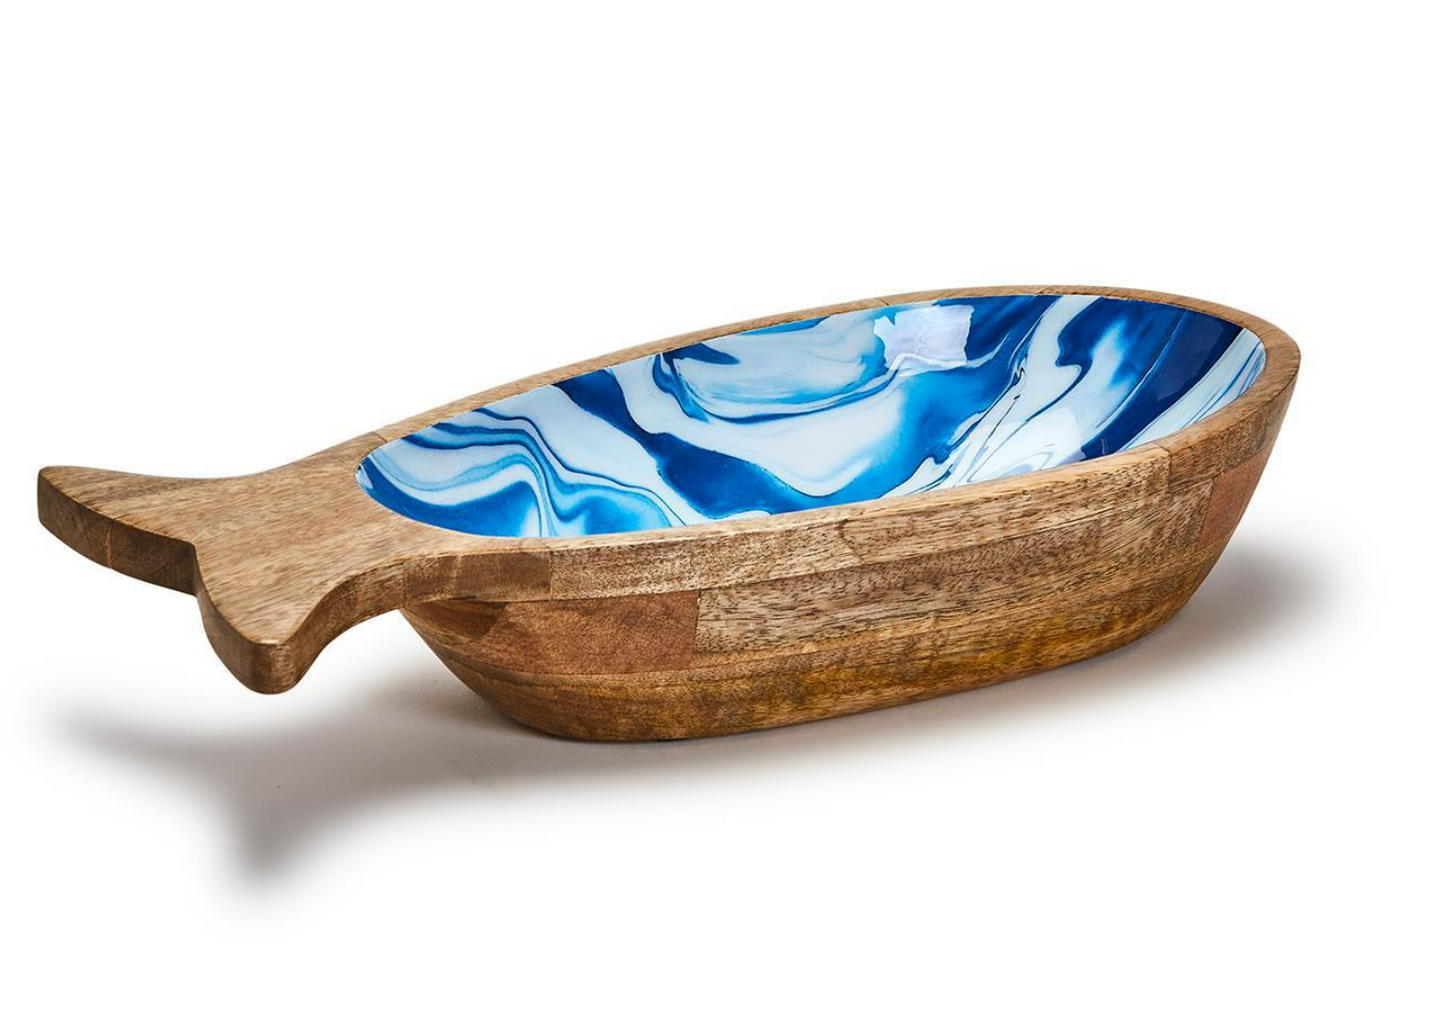 Aptware Blue Fish Shape Wooden Bowl